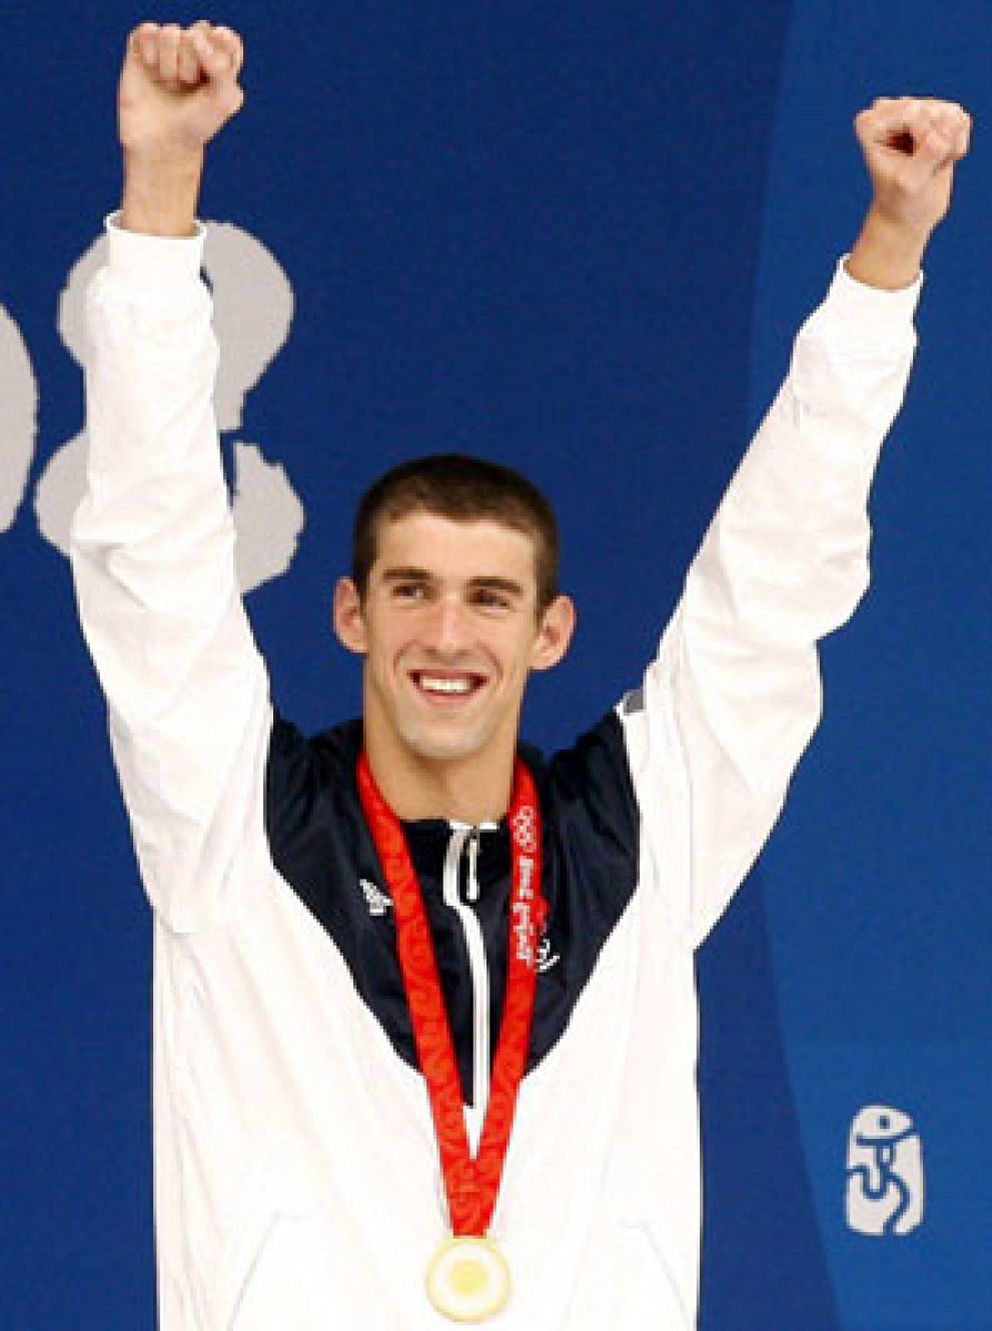 Foto: El brazo de Phelps le da la séptima